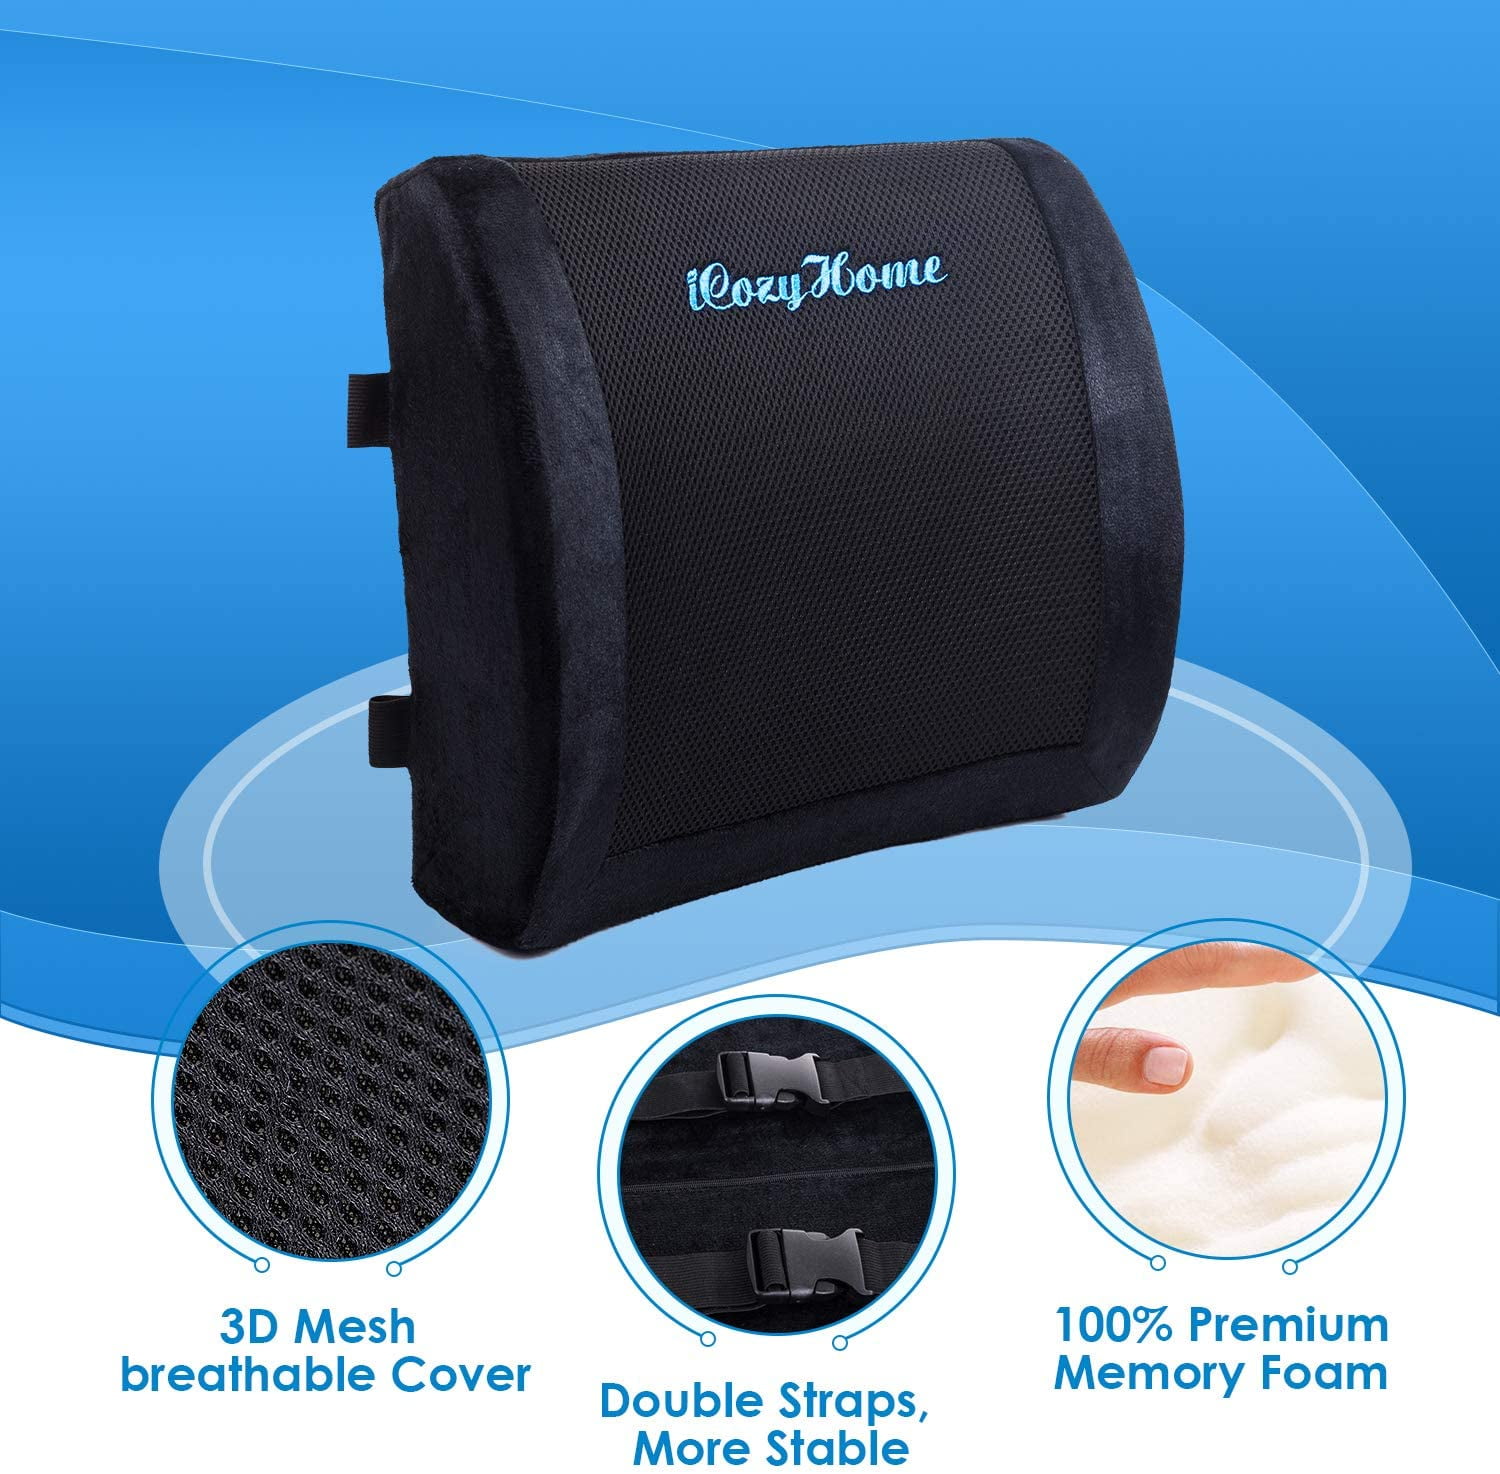 Kieba Coccyx Seat Cushion, Cool Gel Memory Foam Large Orthopedic Tailbone  Pillow for Sciatica, Back, and Tailbone Pain (Black)